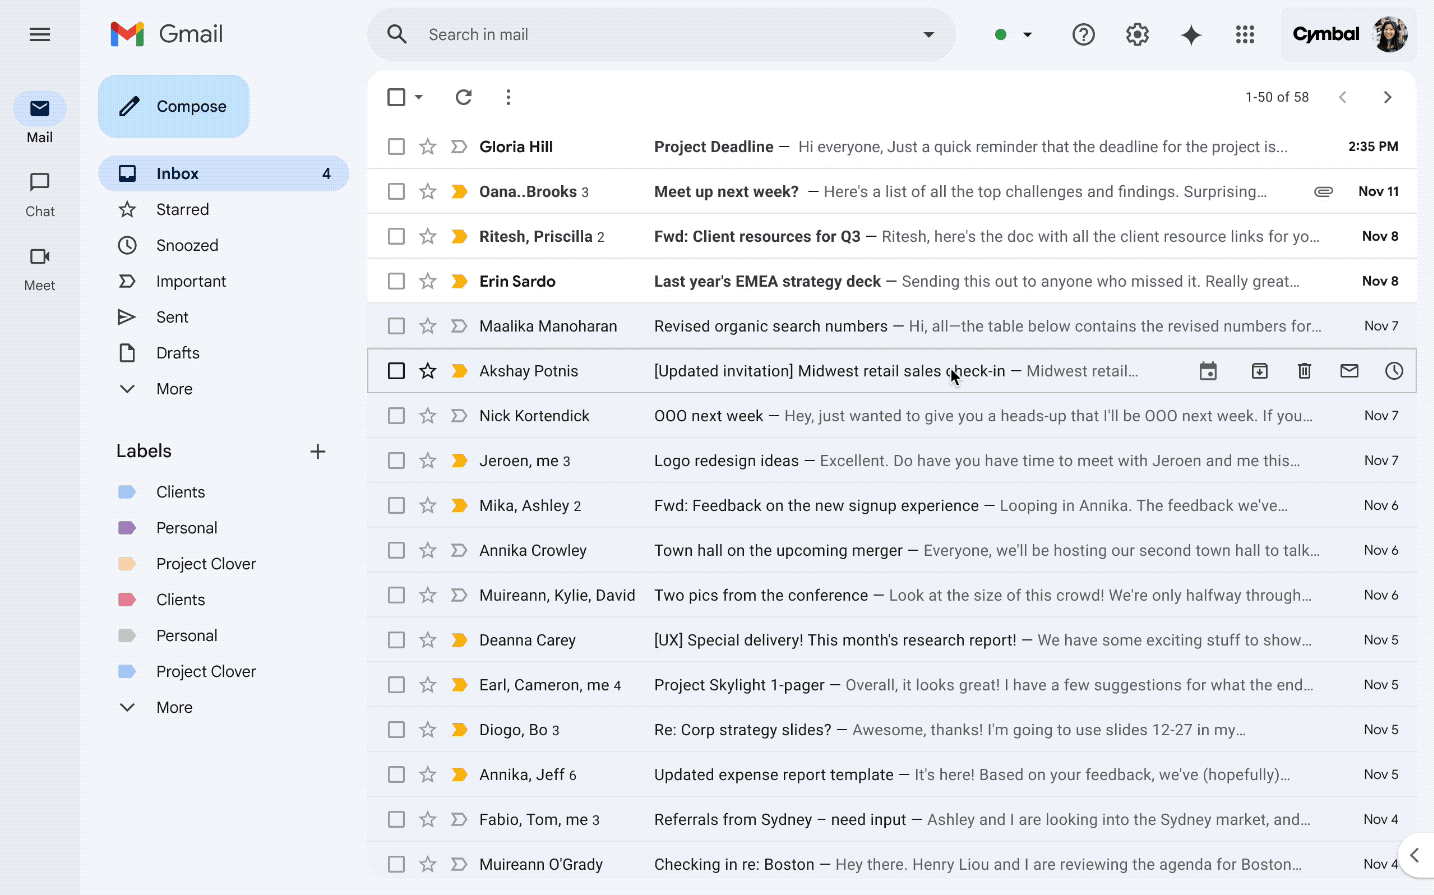 Gemini integration within Gmail